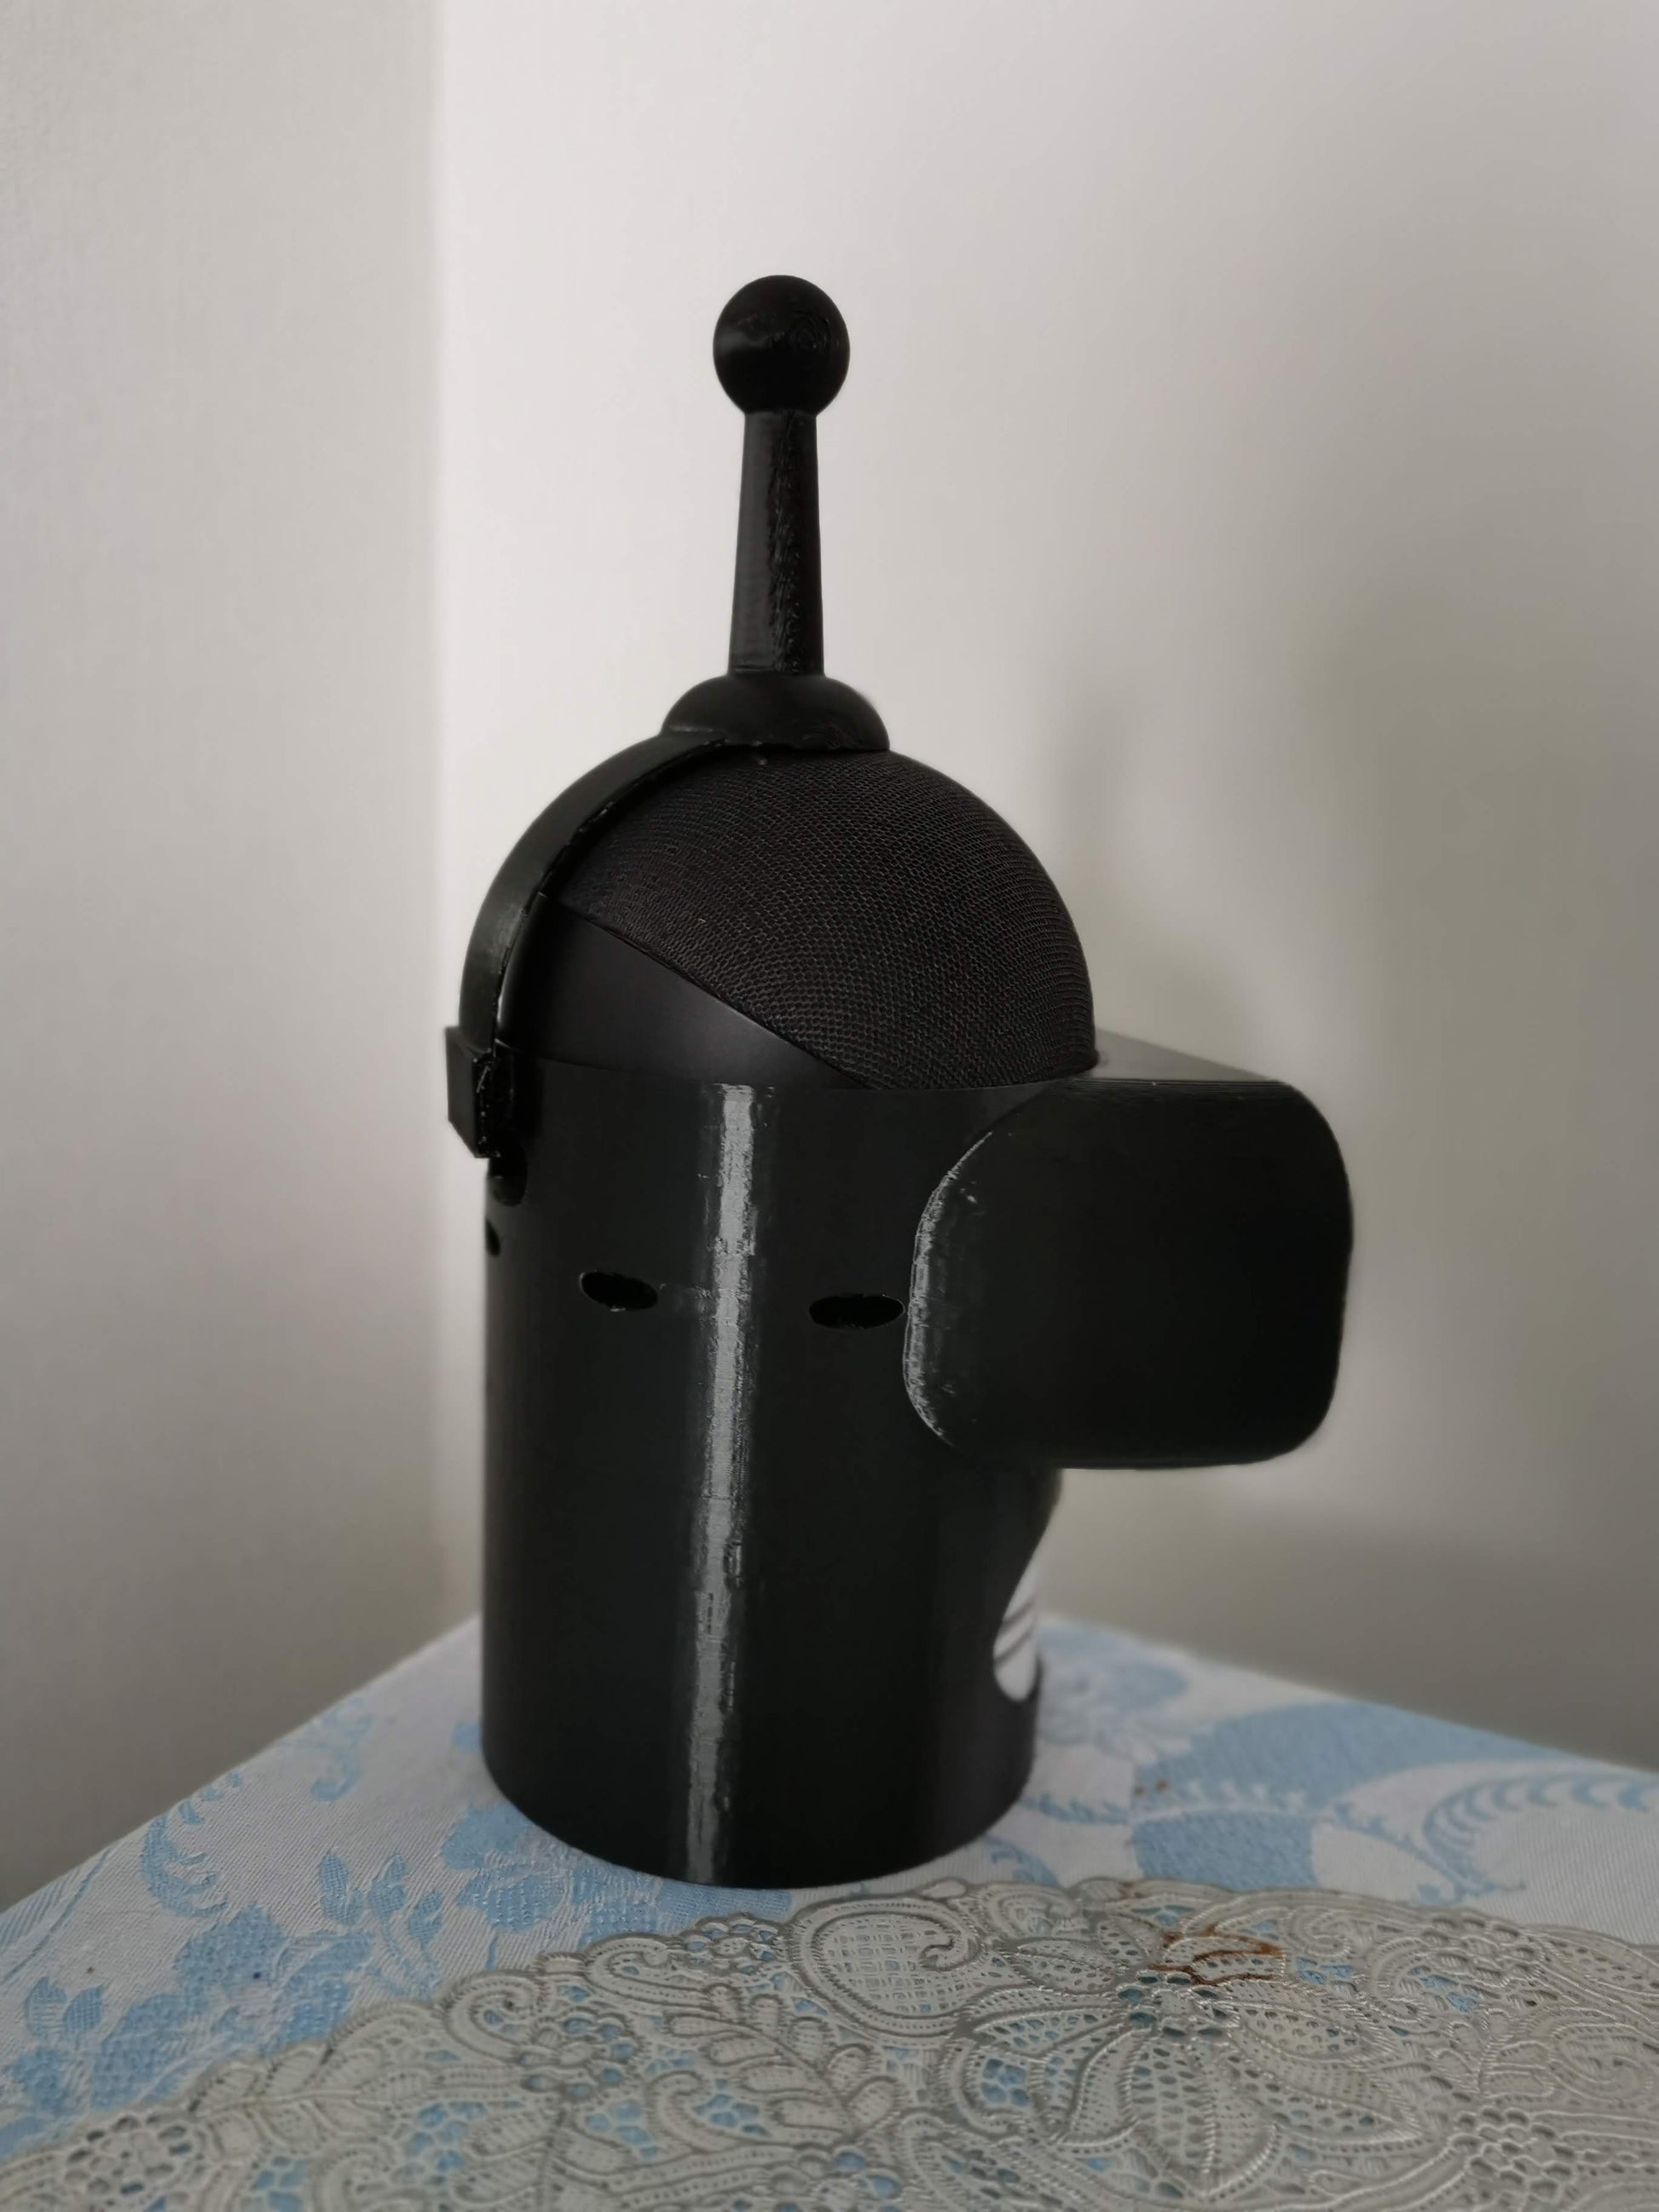 Bender Alexa Echo holder from the back (in black)